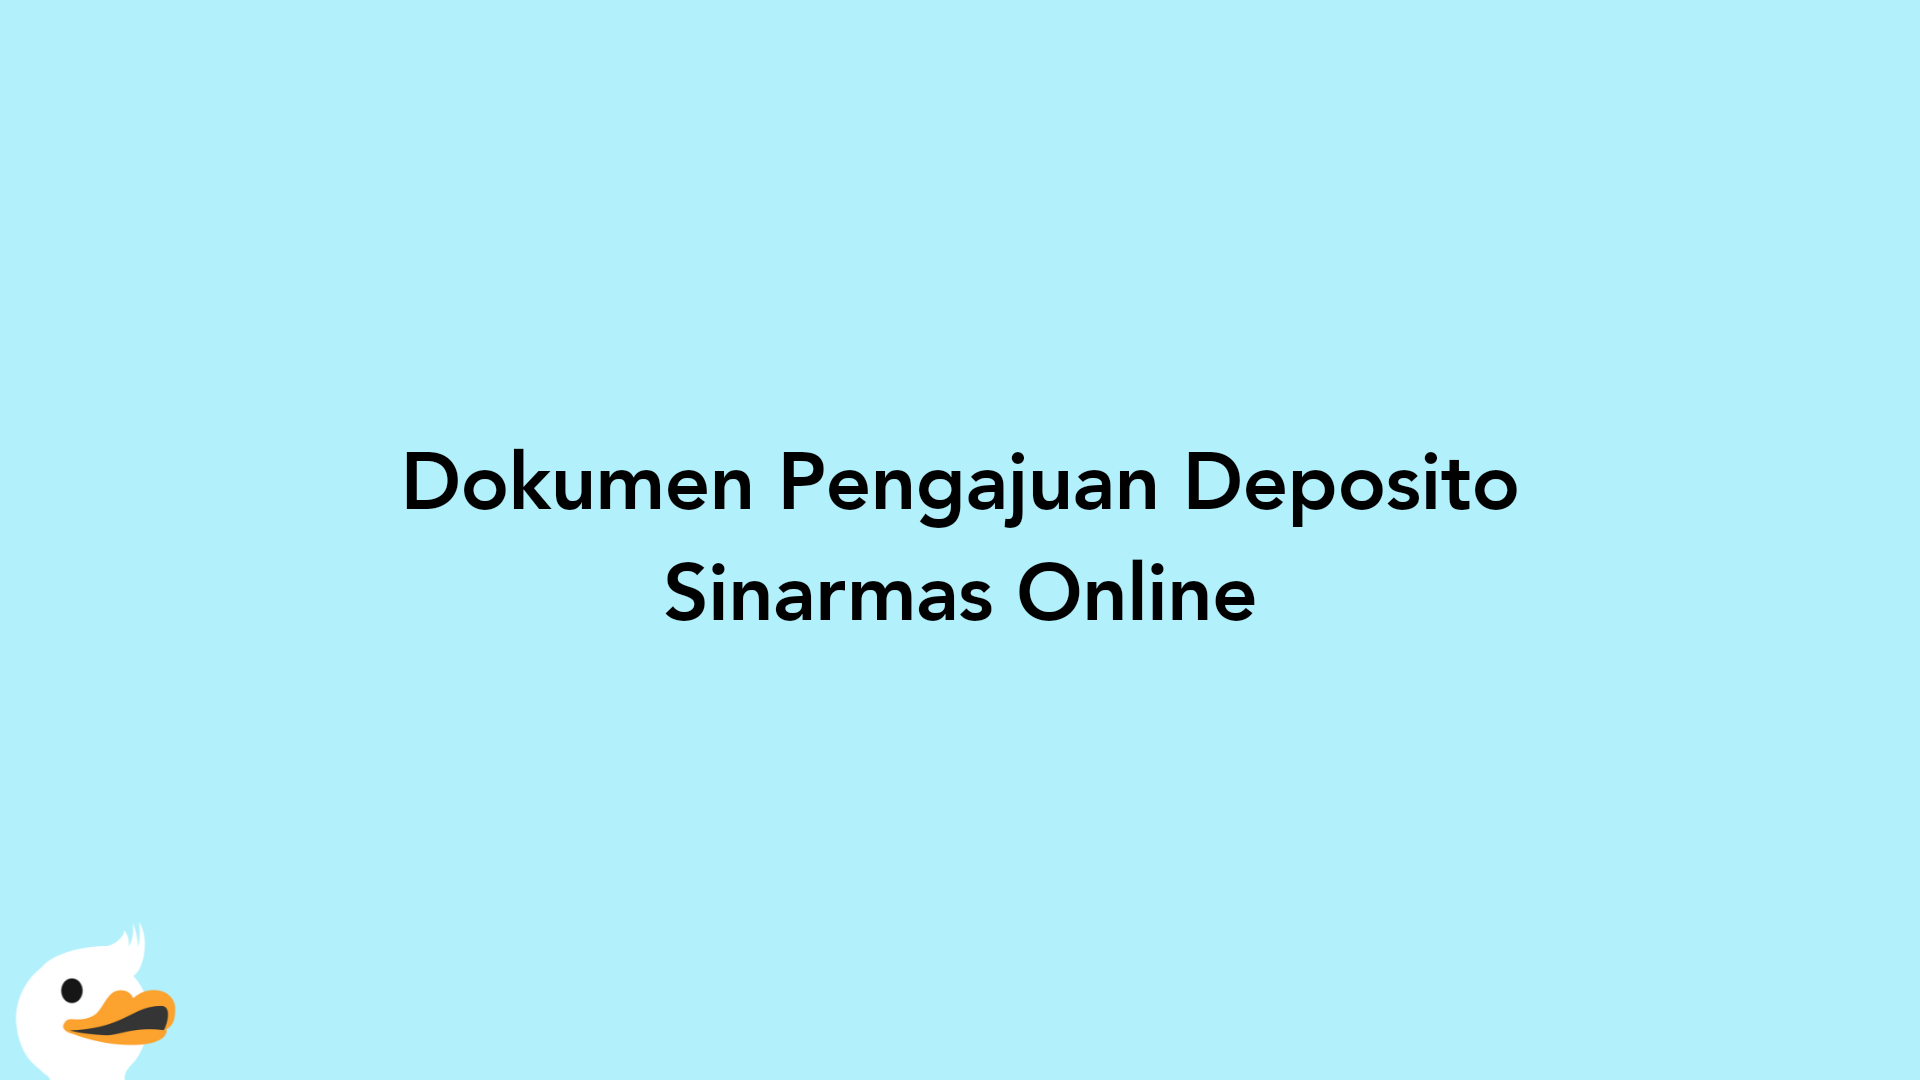 Dokumen Pengajuan Deposito Sinarmas Online